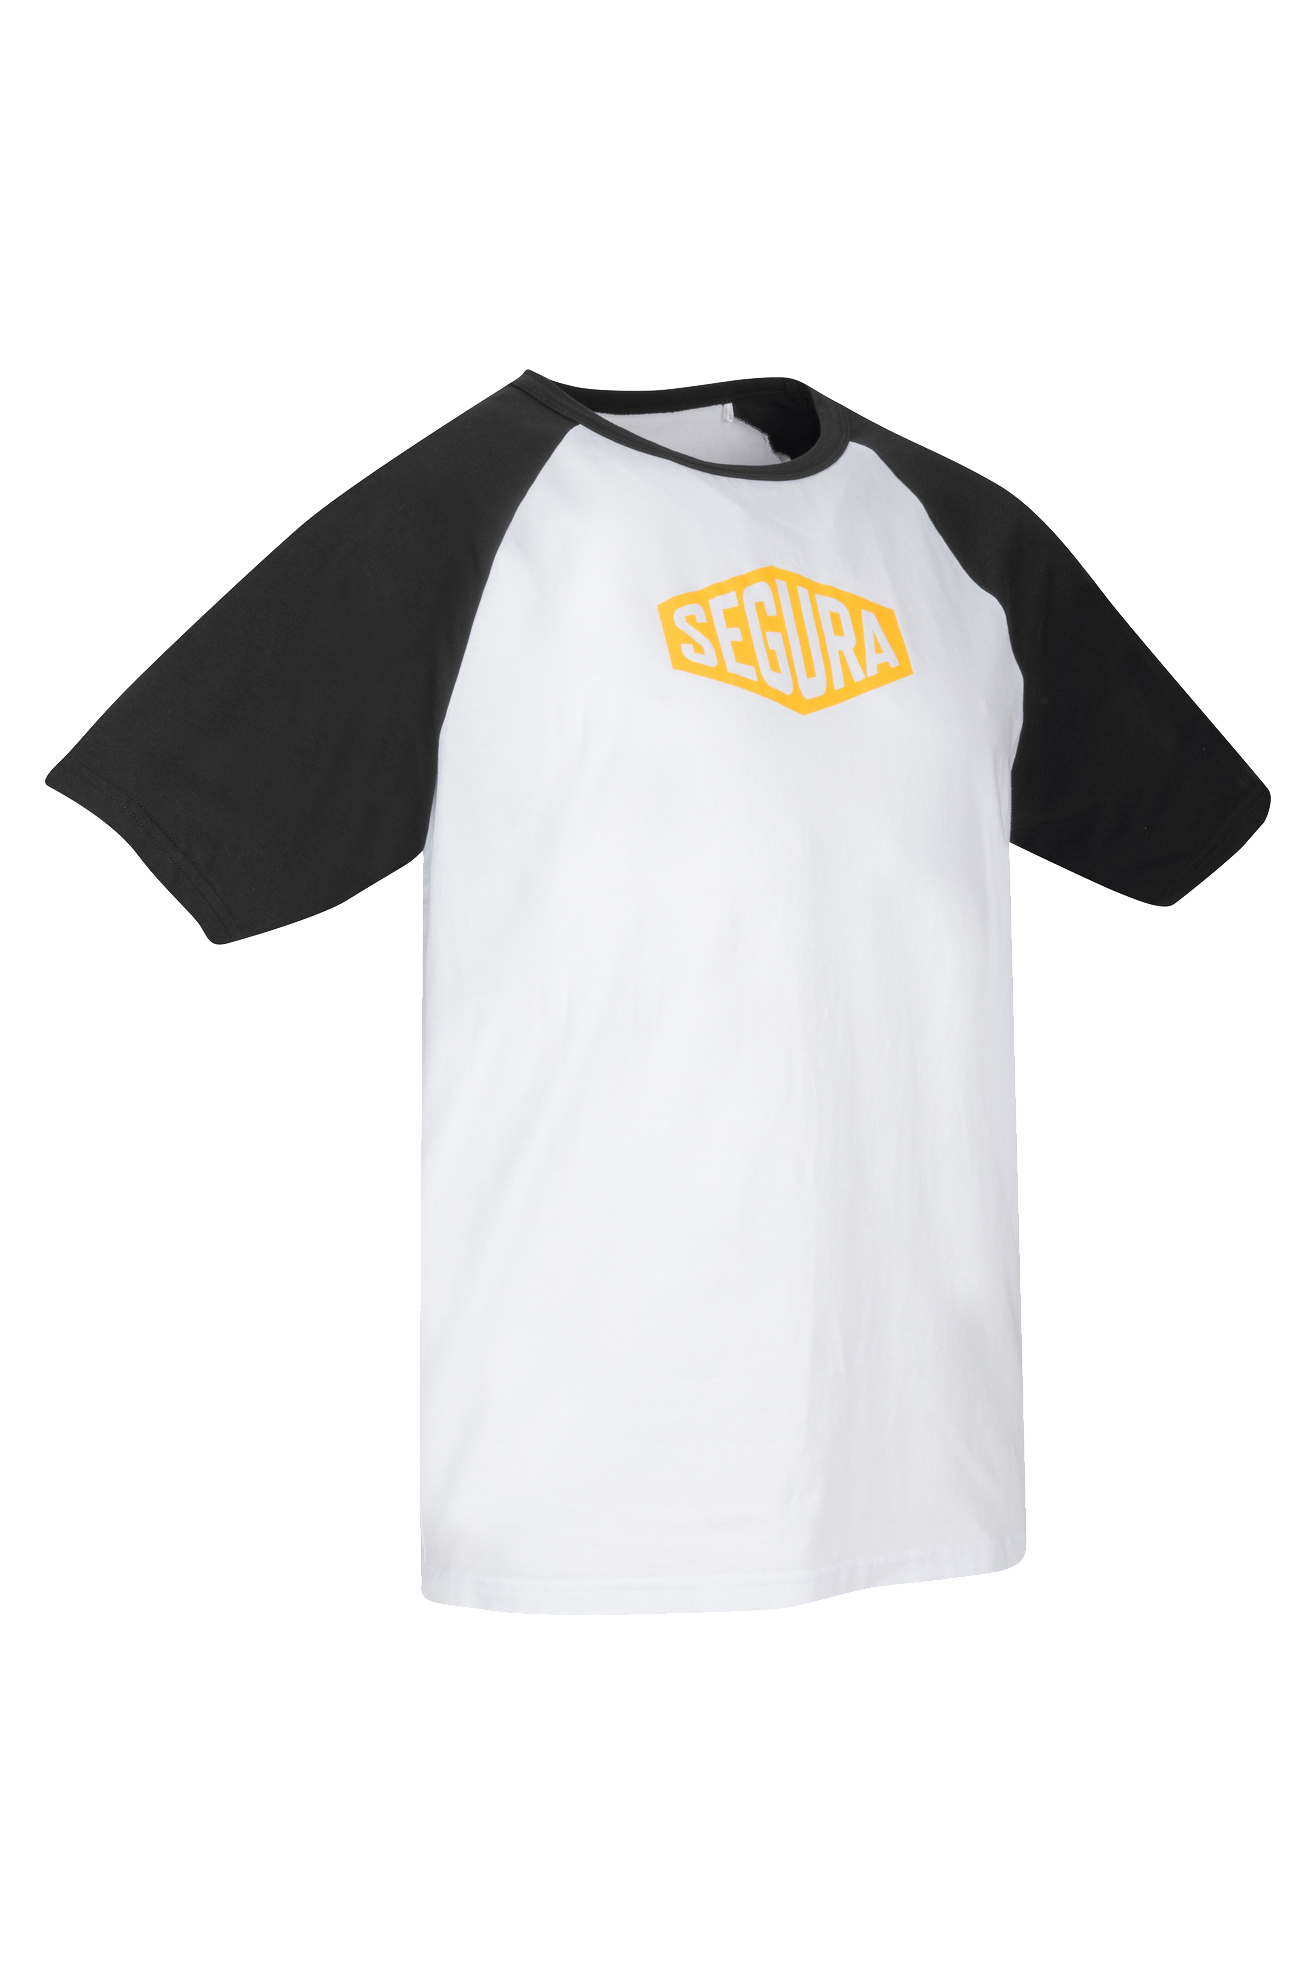 Segura Camiseta  First Negro-Blanco